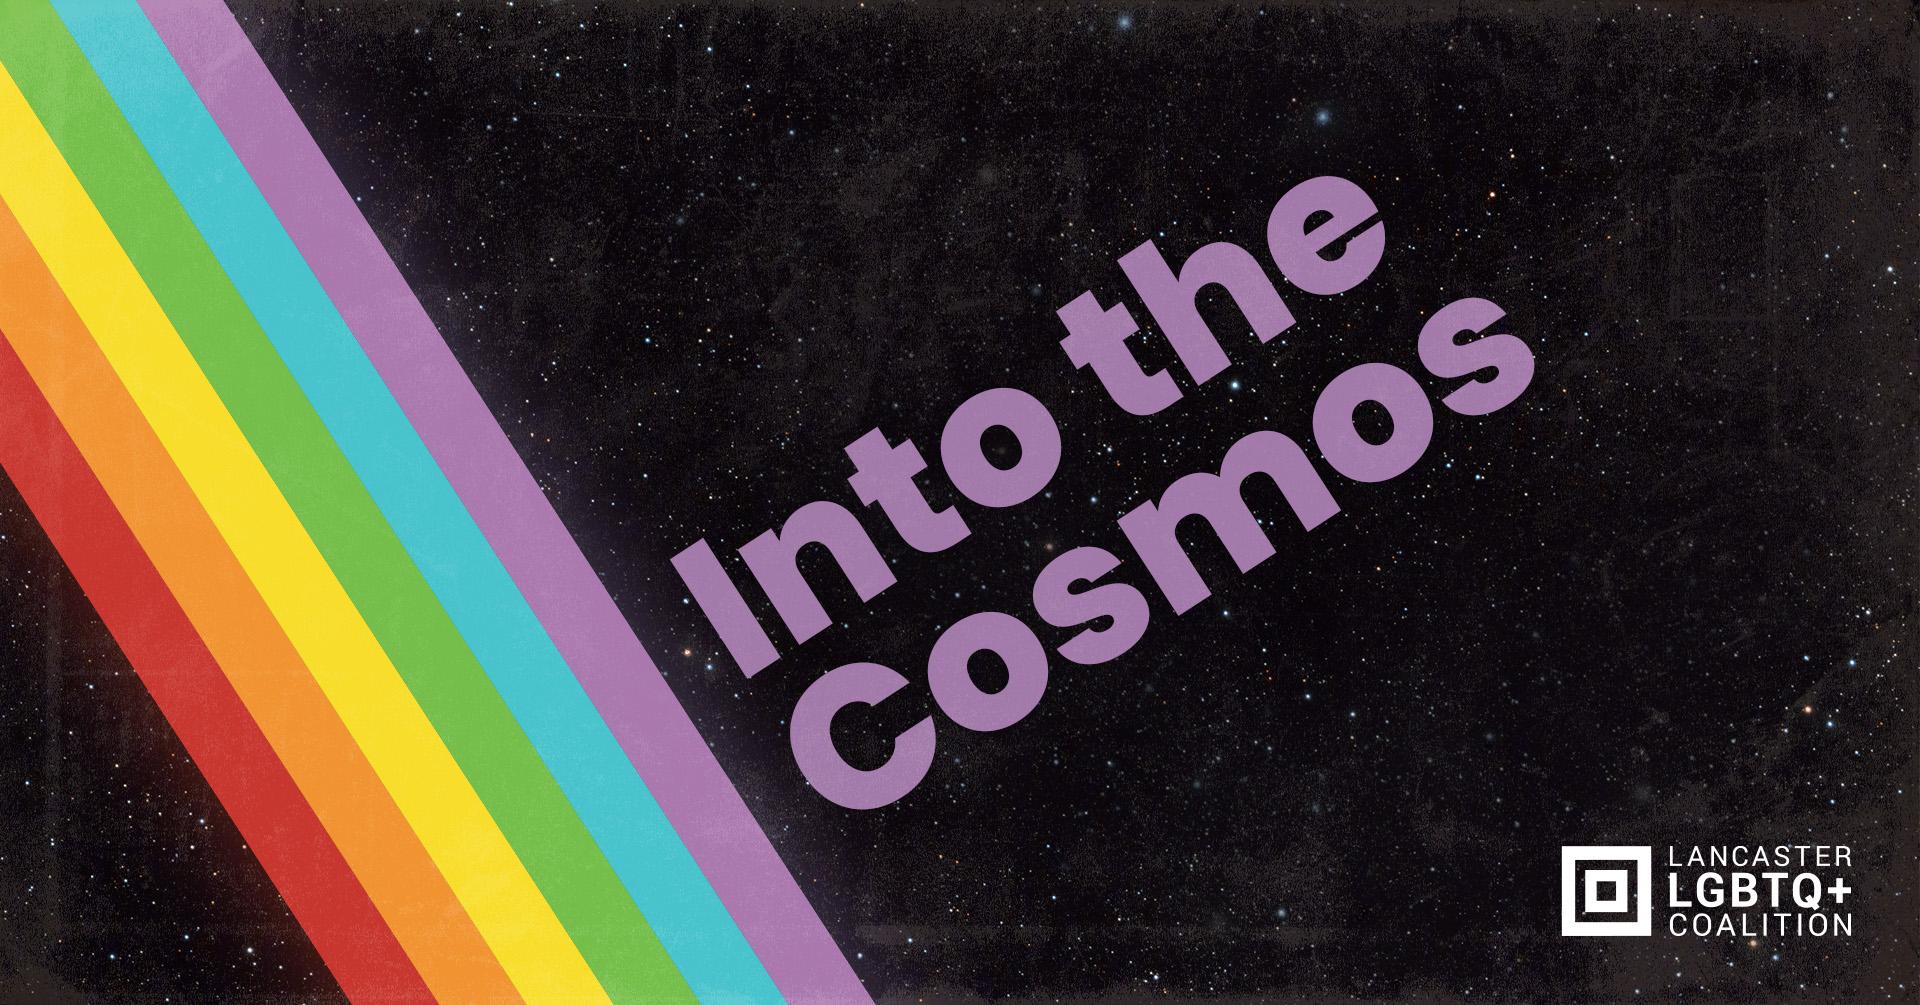 Into the Cosmos